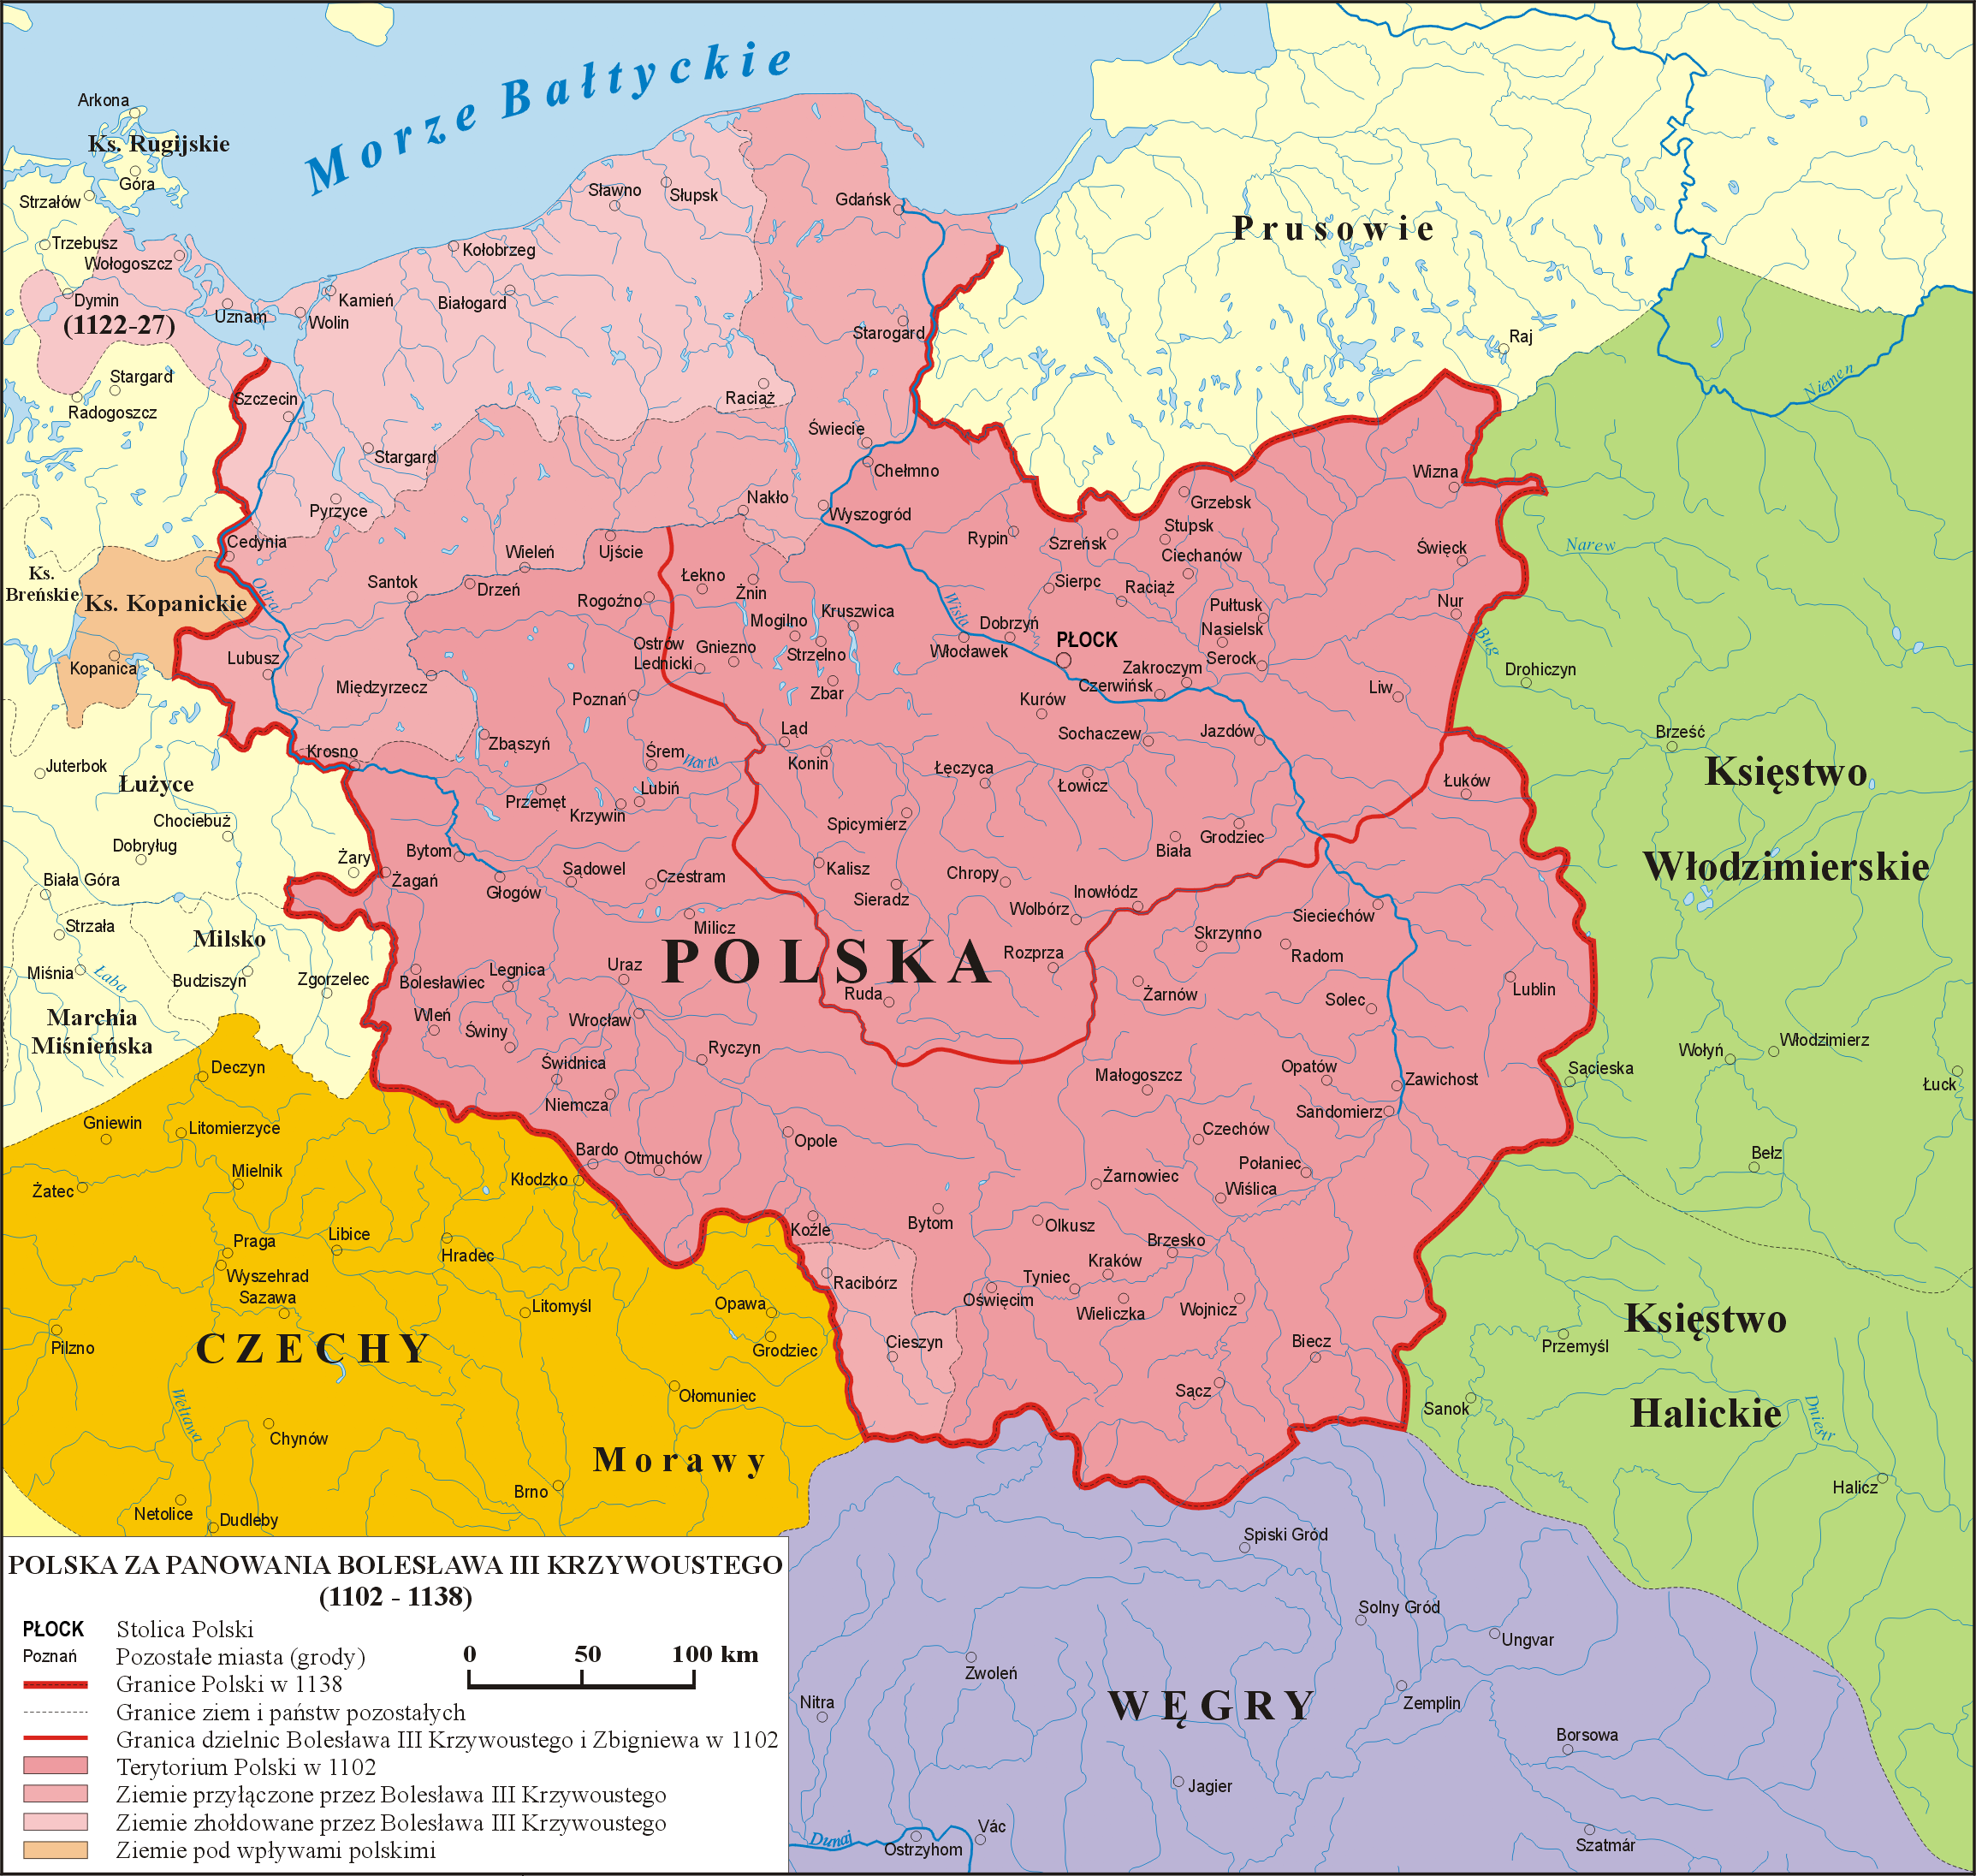 FilePolska w latach 1102 1138.png Wikimedia Commons